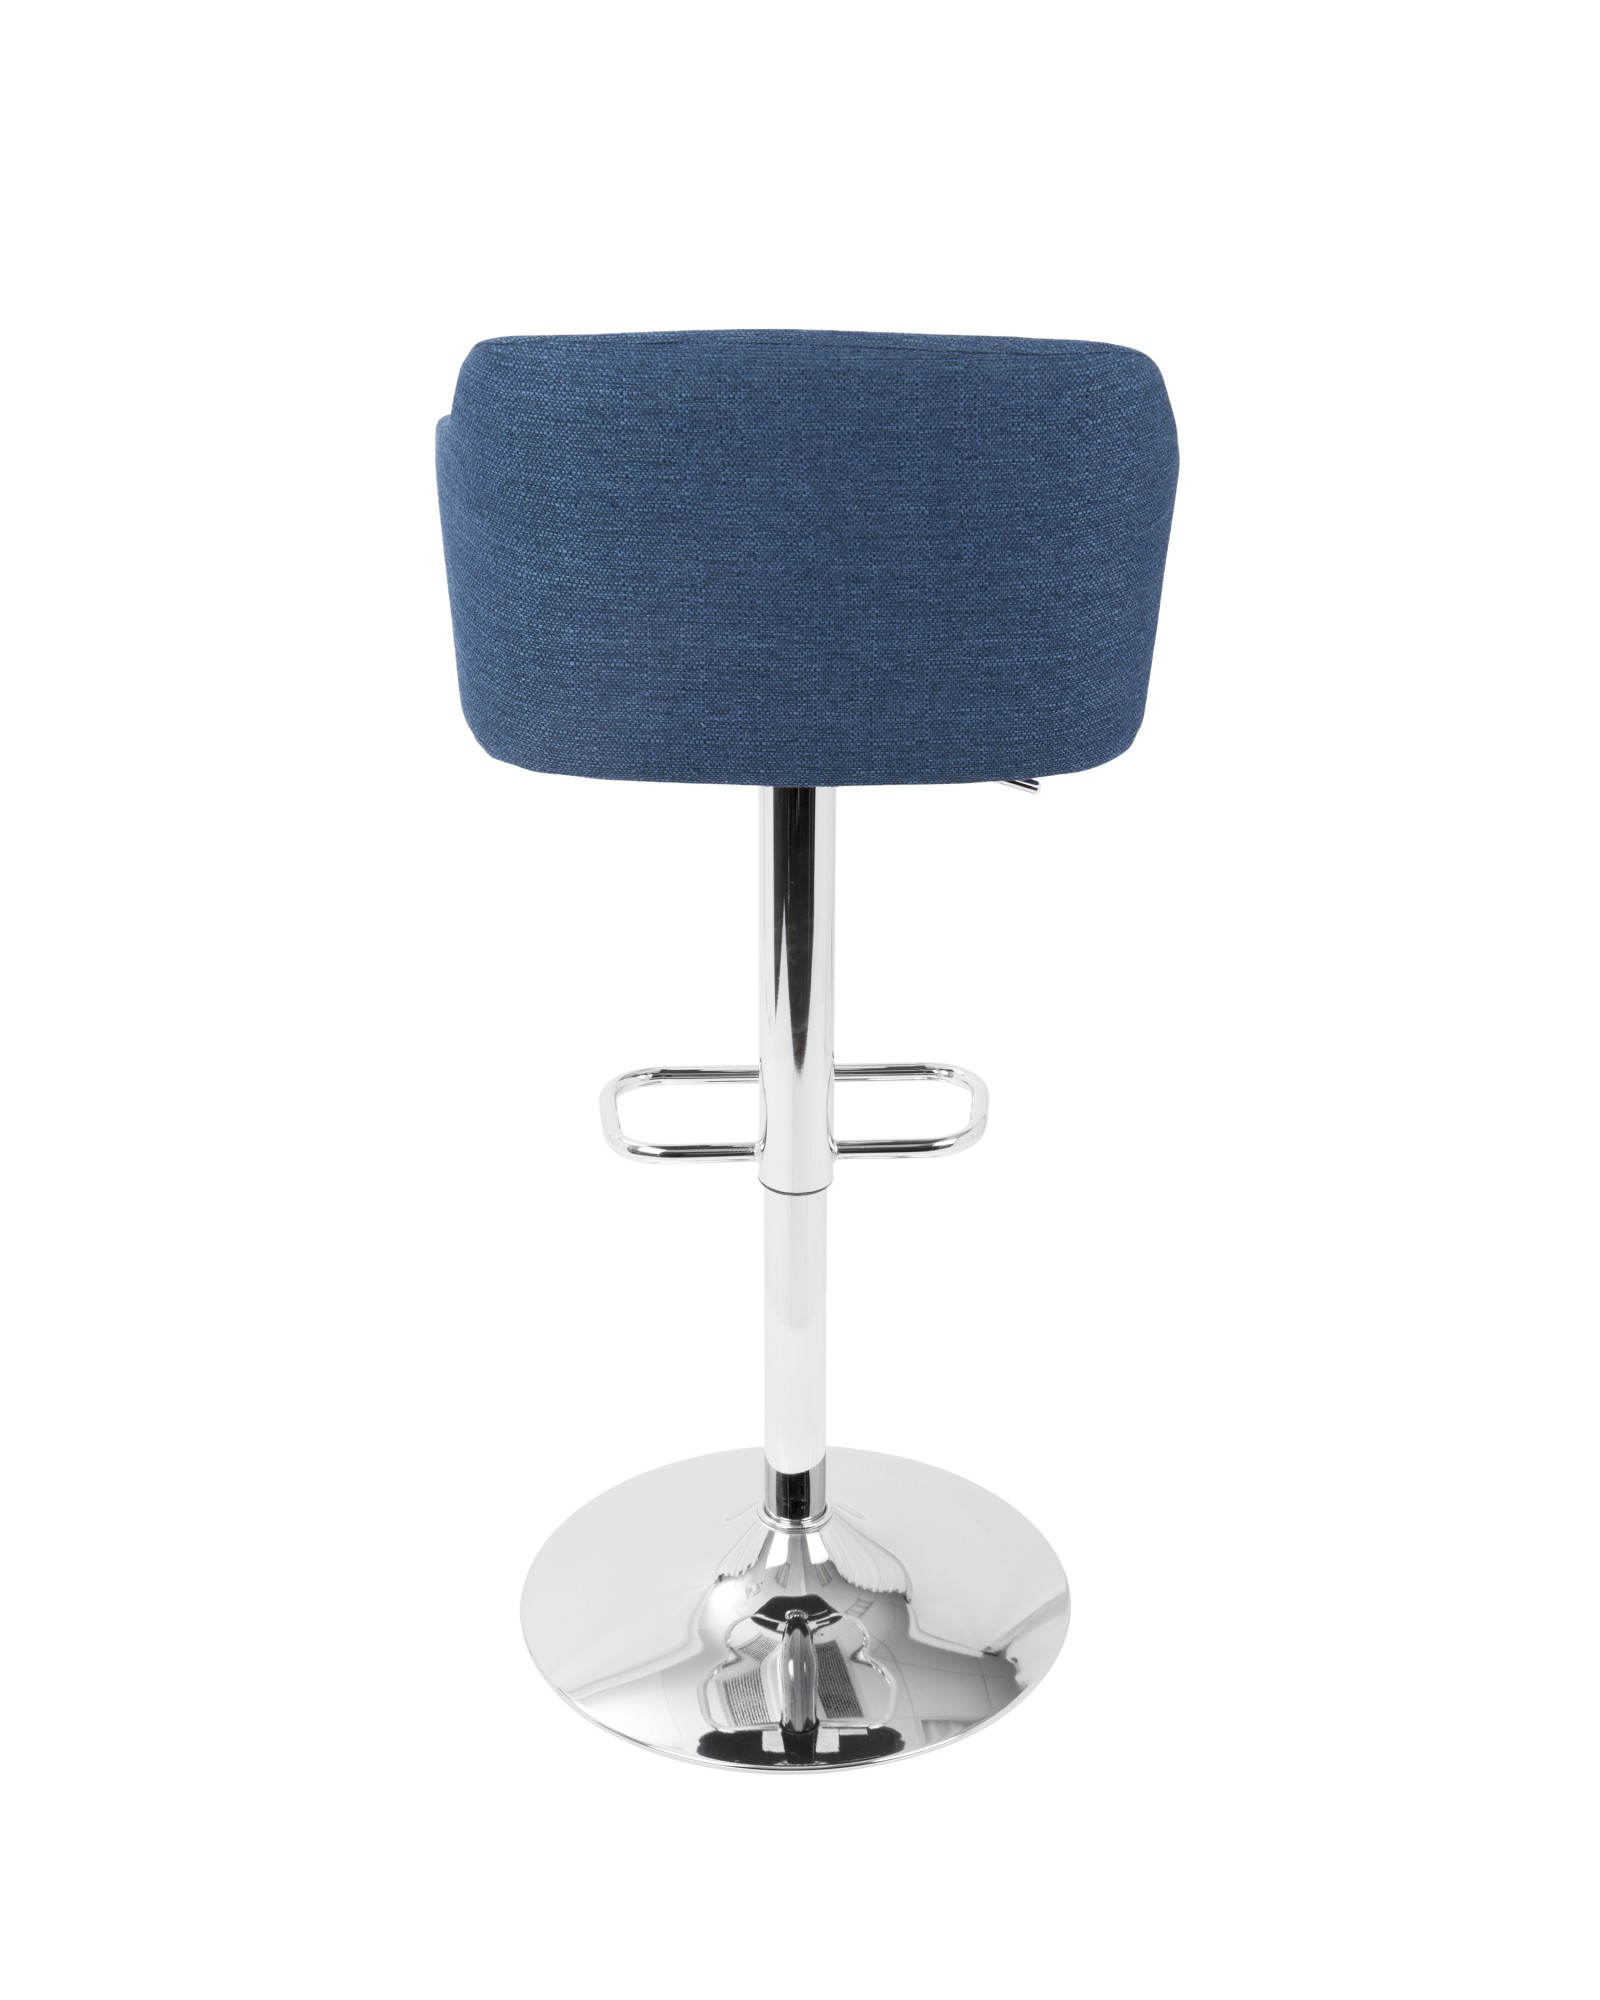 Daniella Contemporary Adjustable Barstool with Swivel in Blue